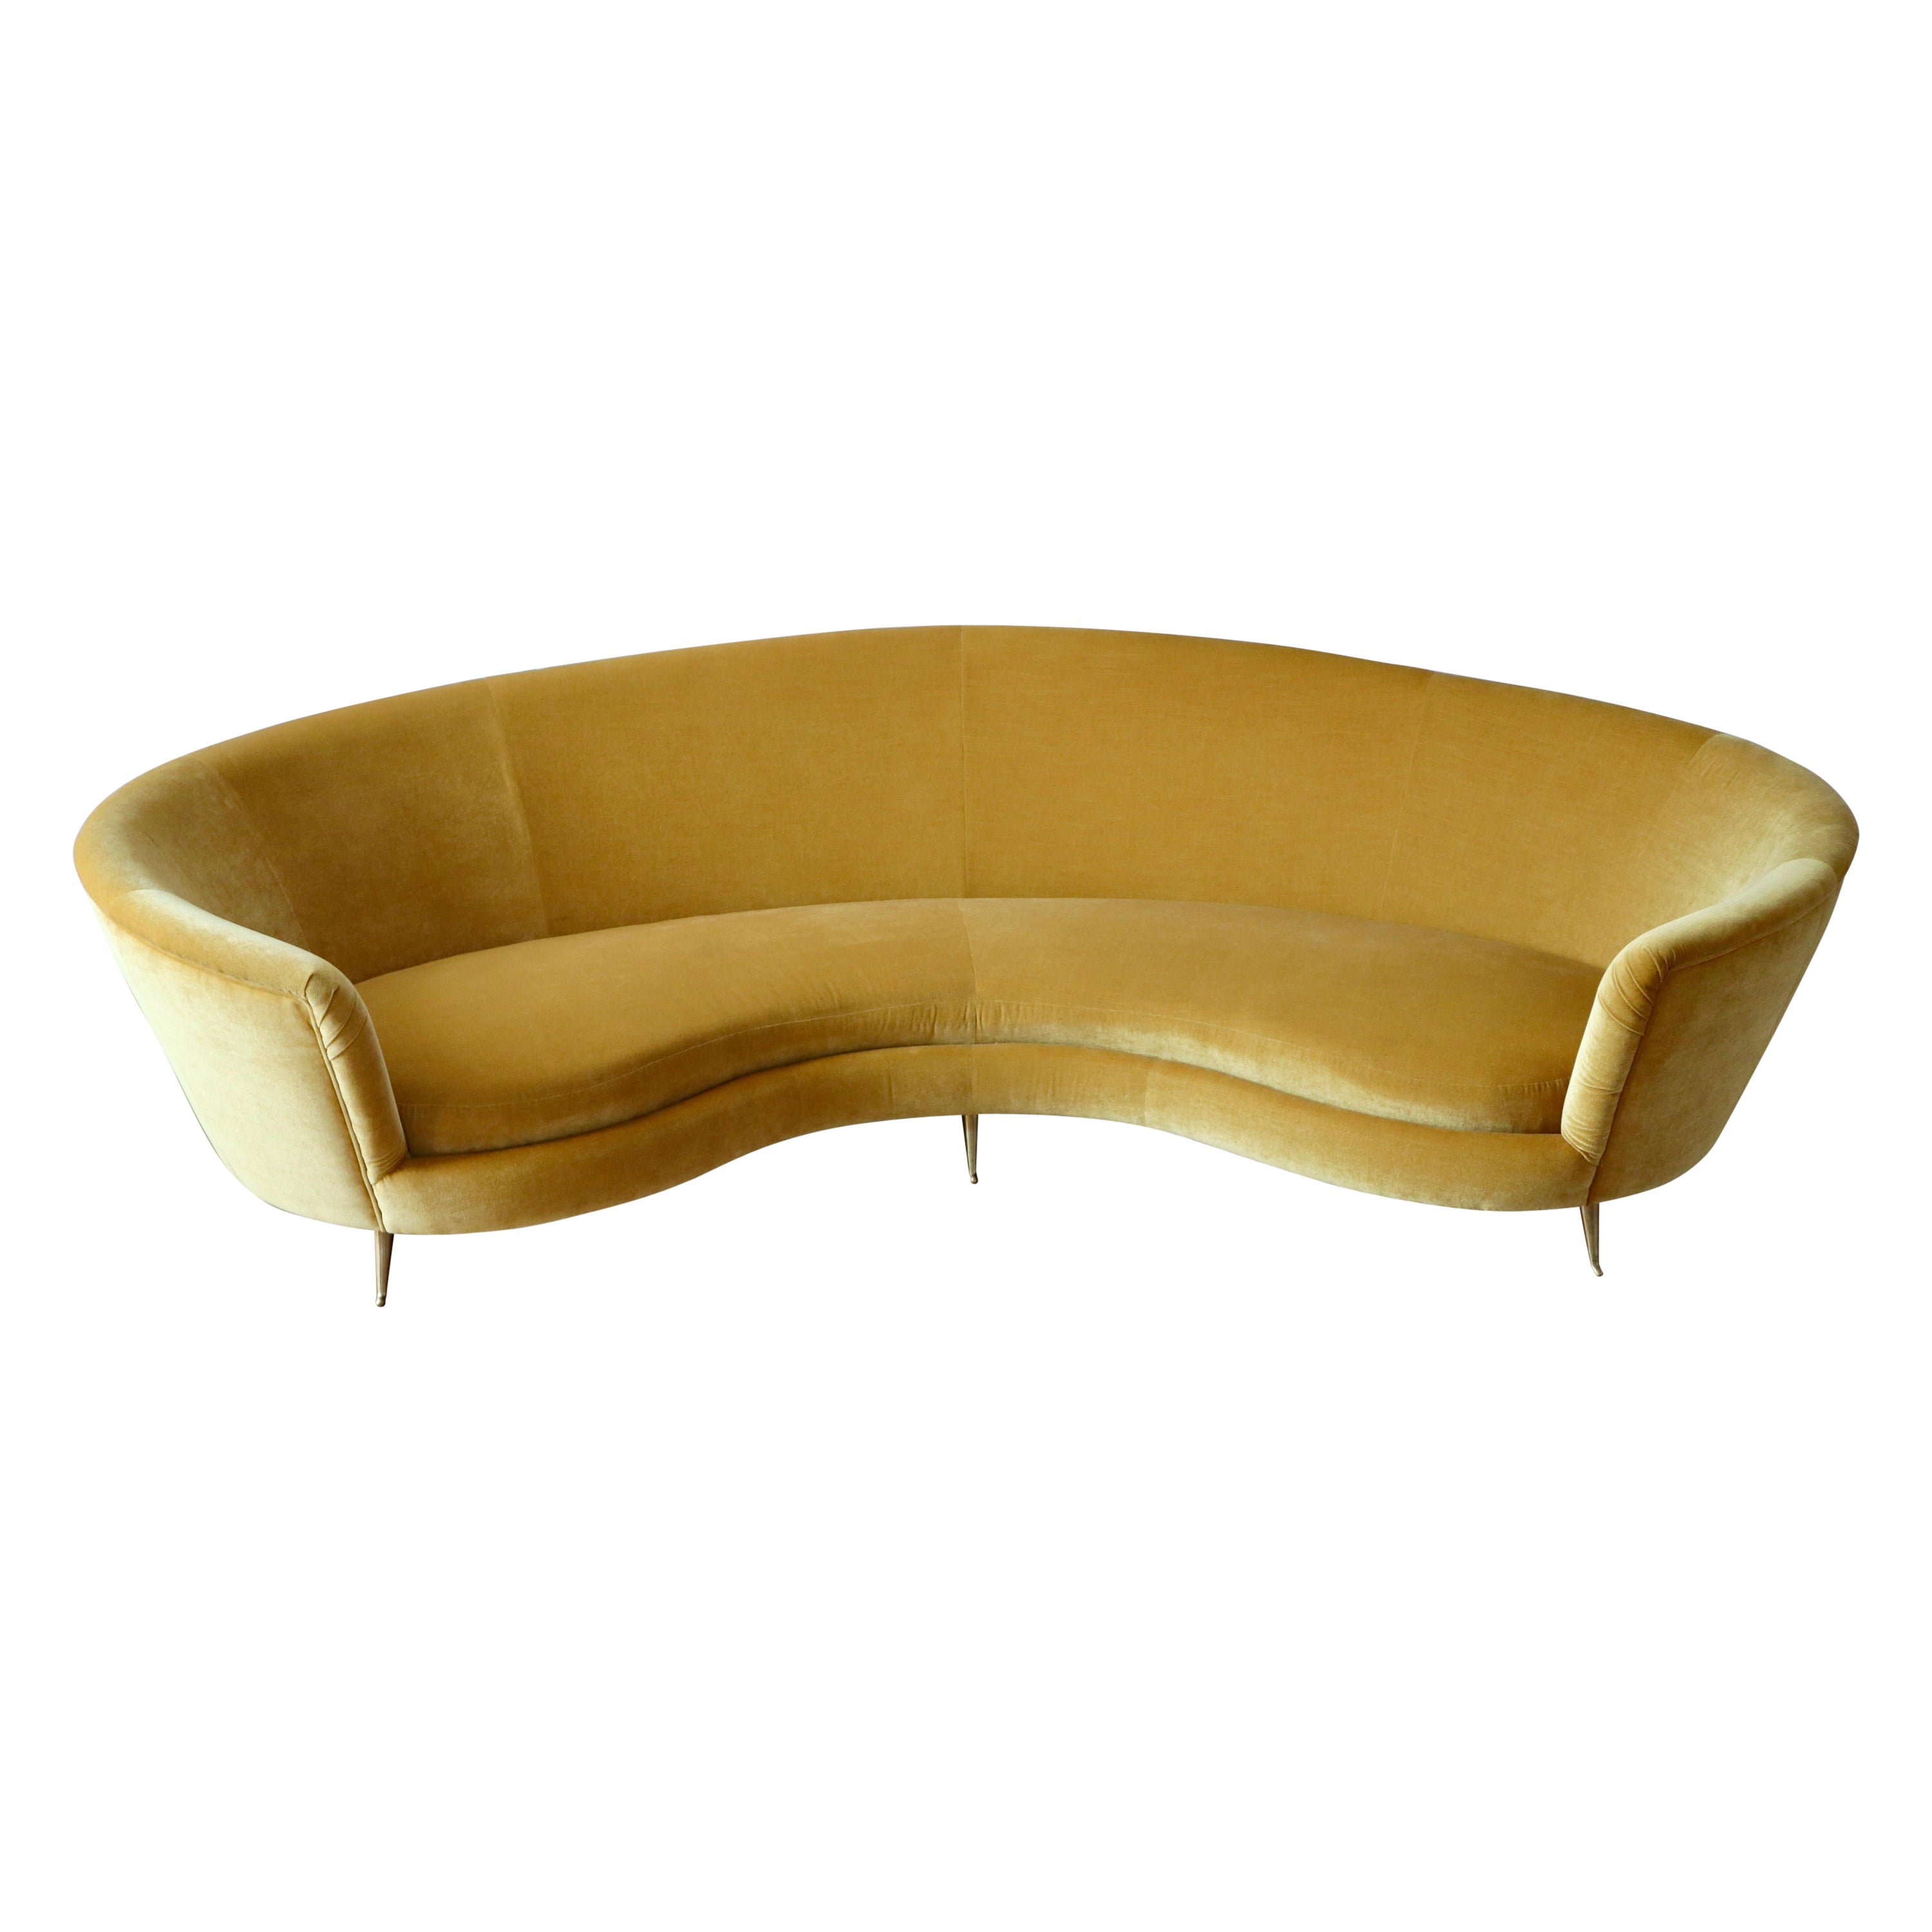 XXL Gio Ponti Style Large Mid Century Modern Italian Crescent Canapé Sofa For Sale